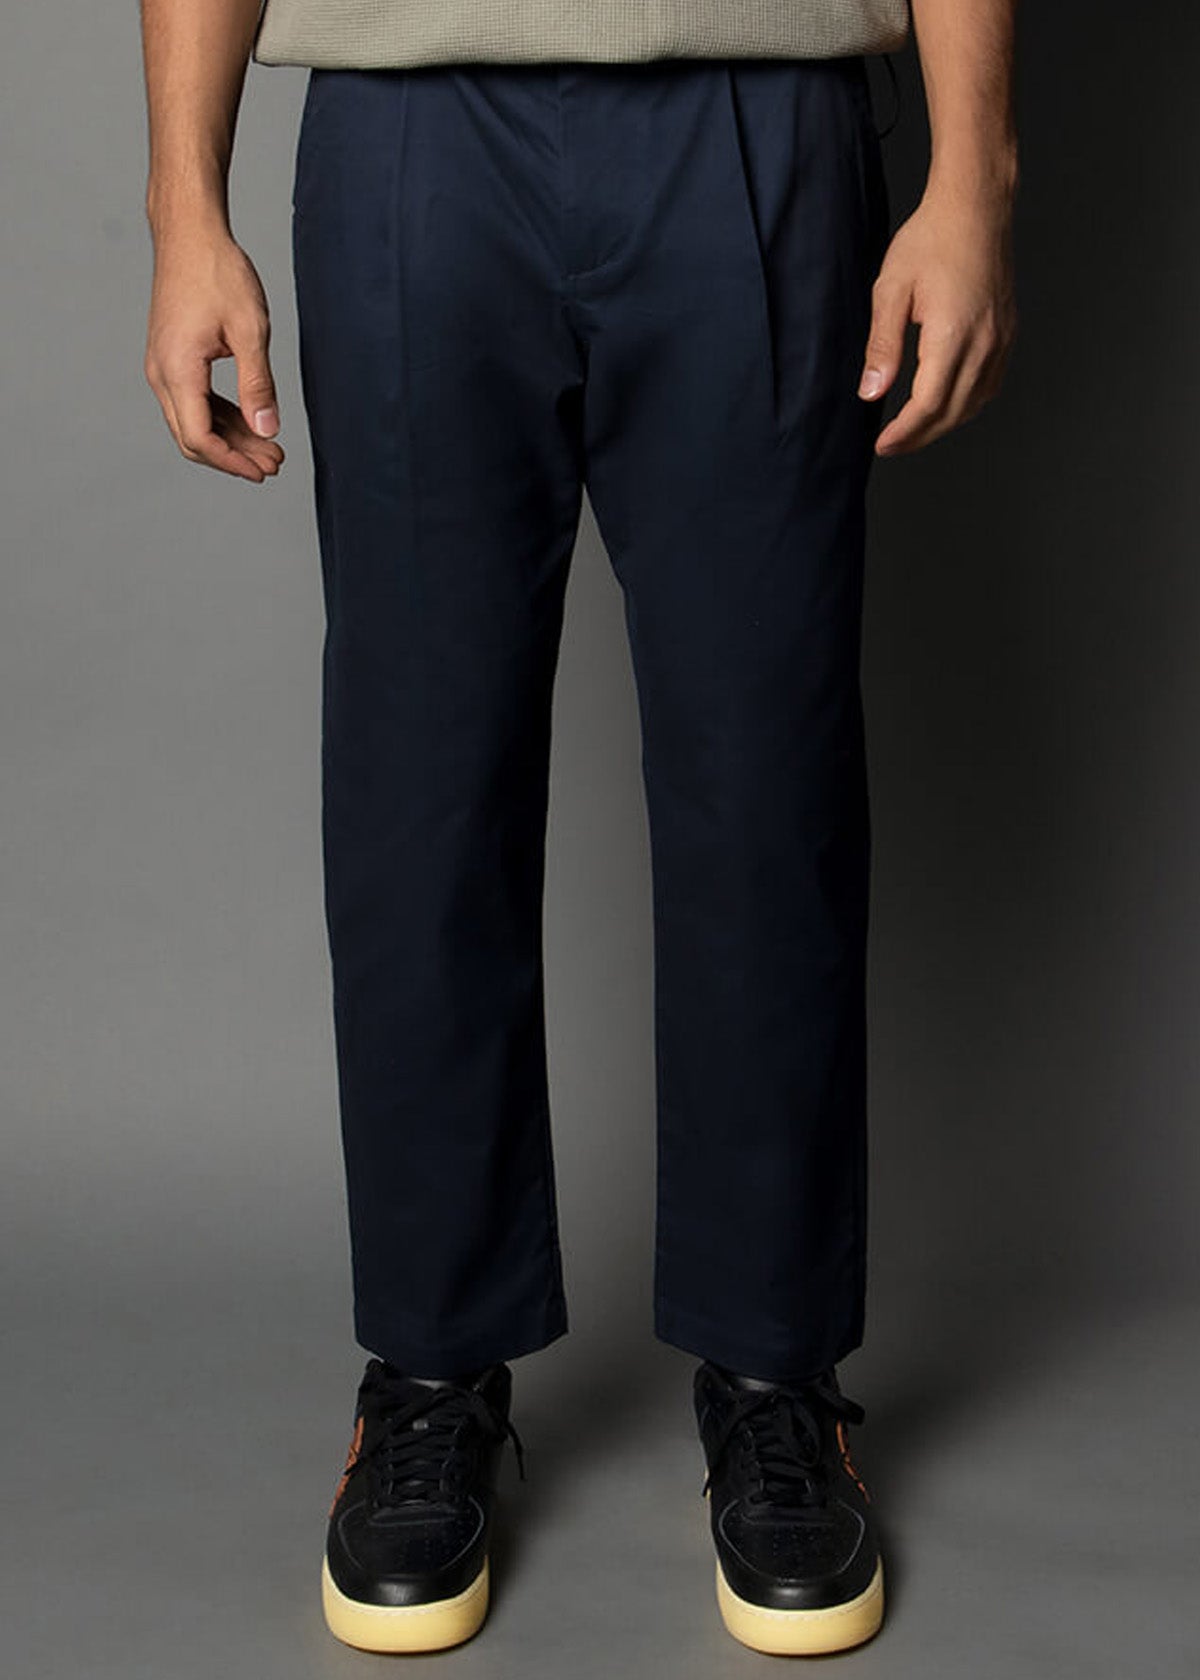 navy blue regular fit men's pants